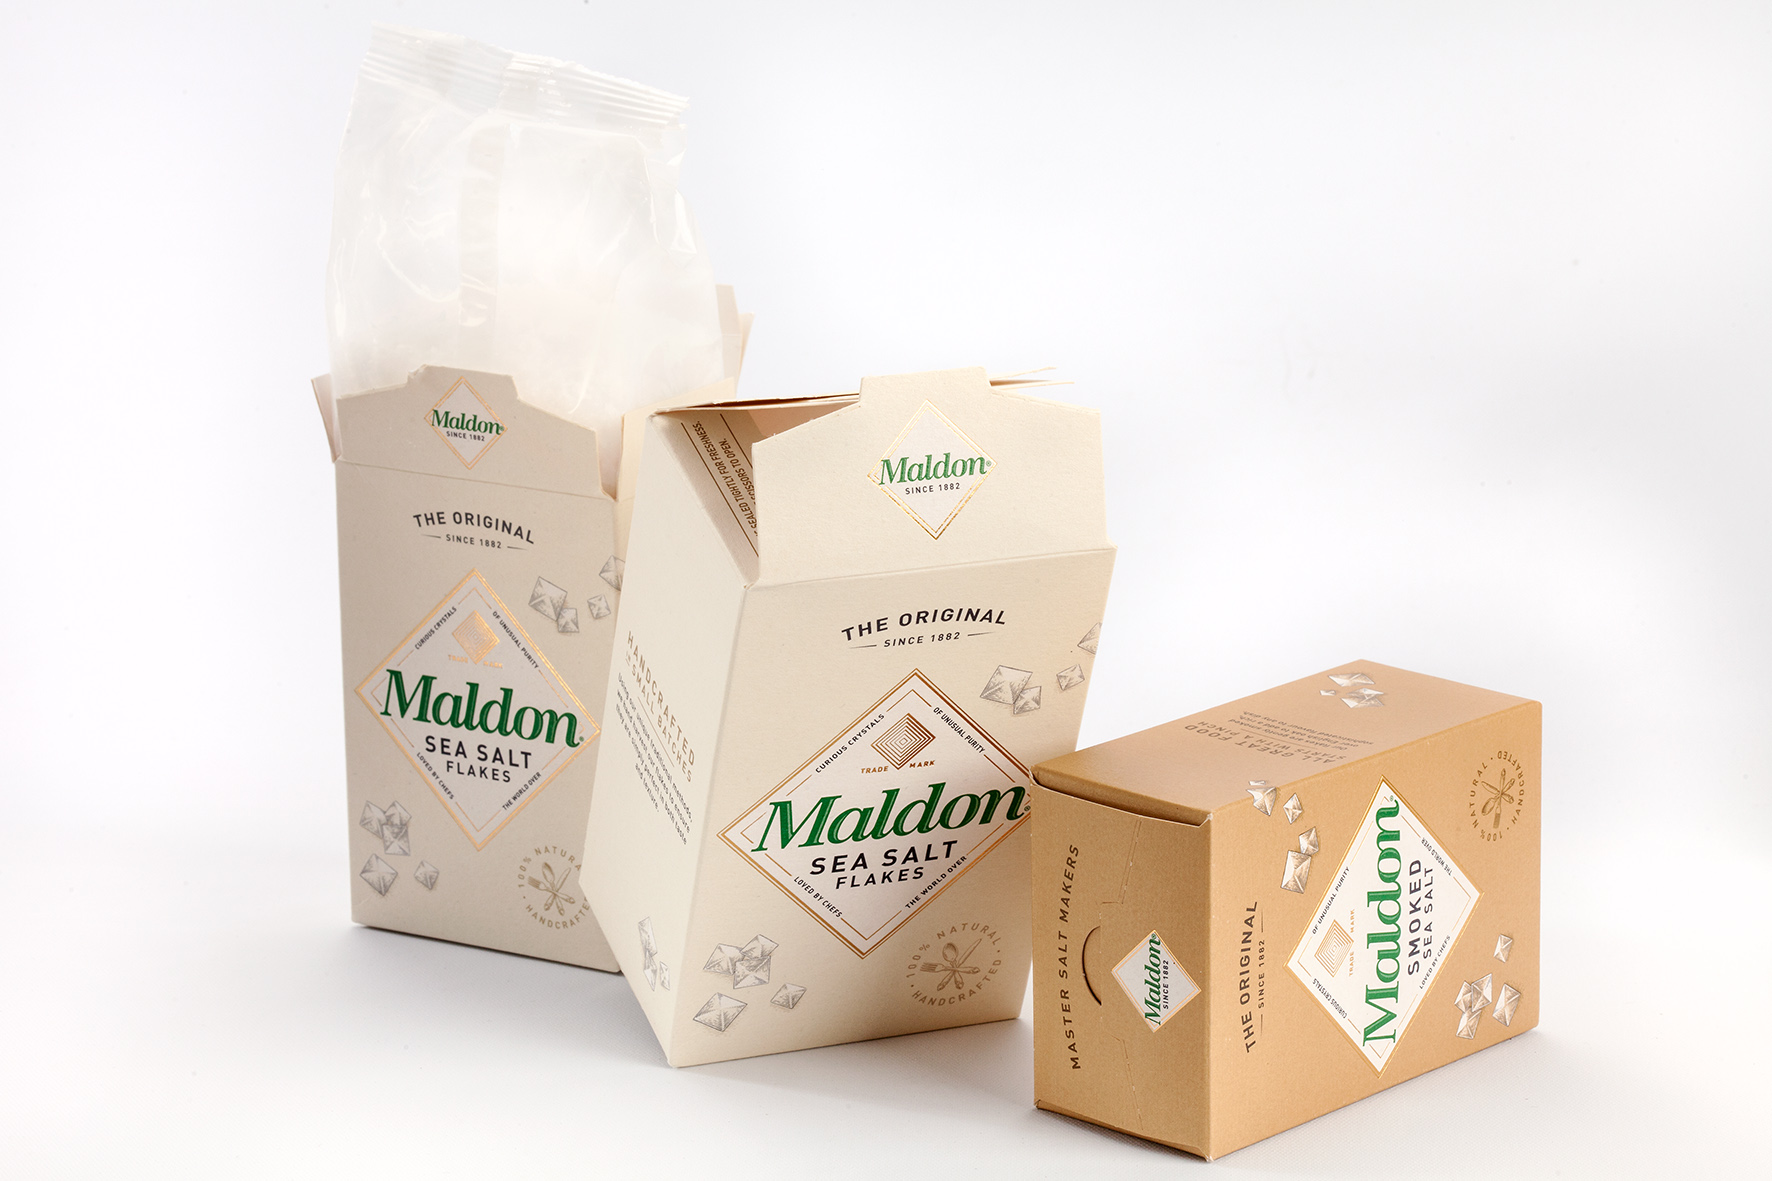 Paquetes de sal Maldon de estilo artesanal